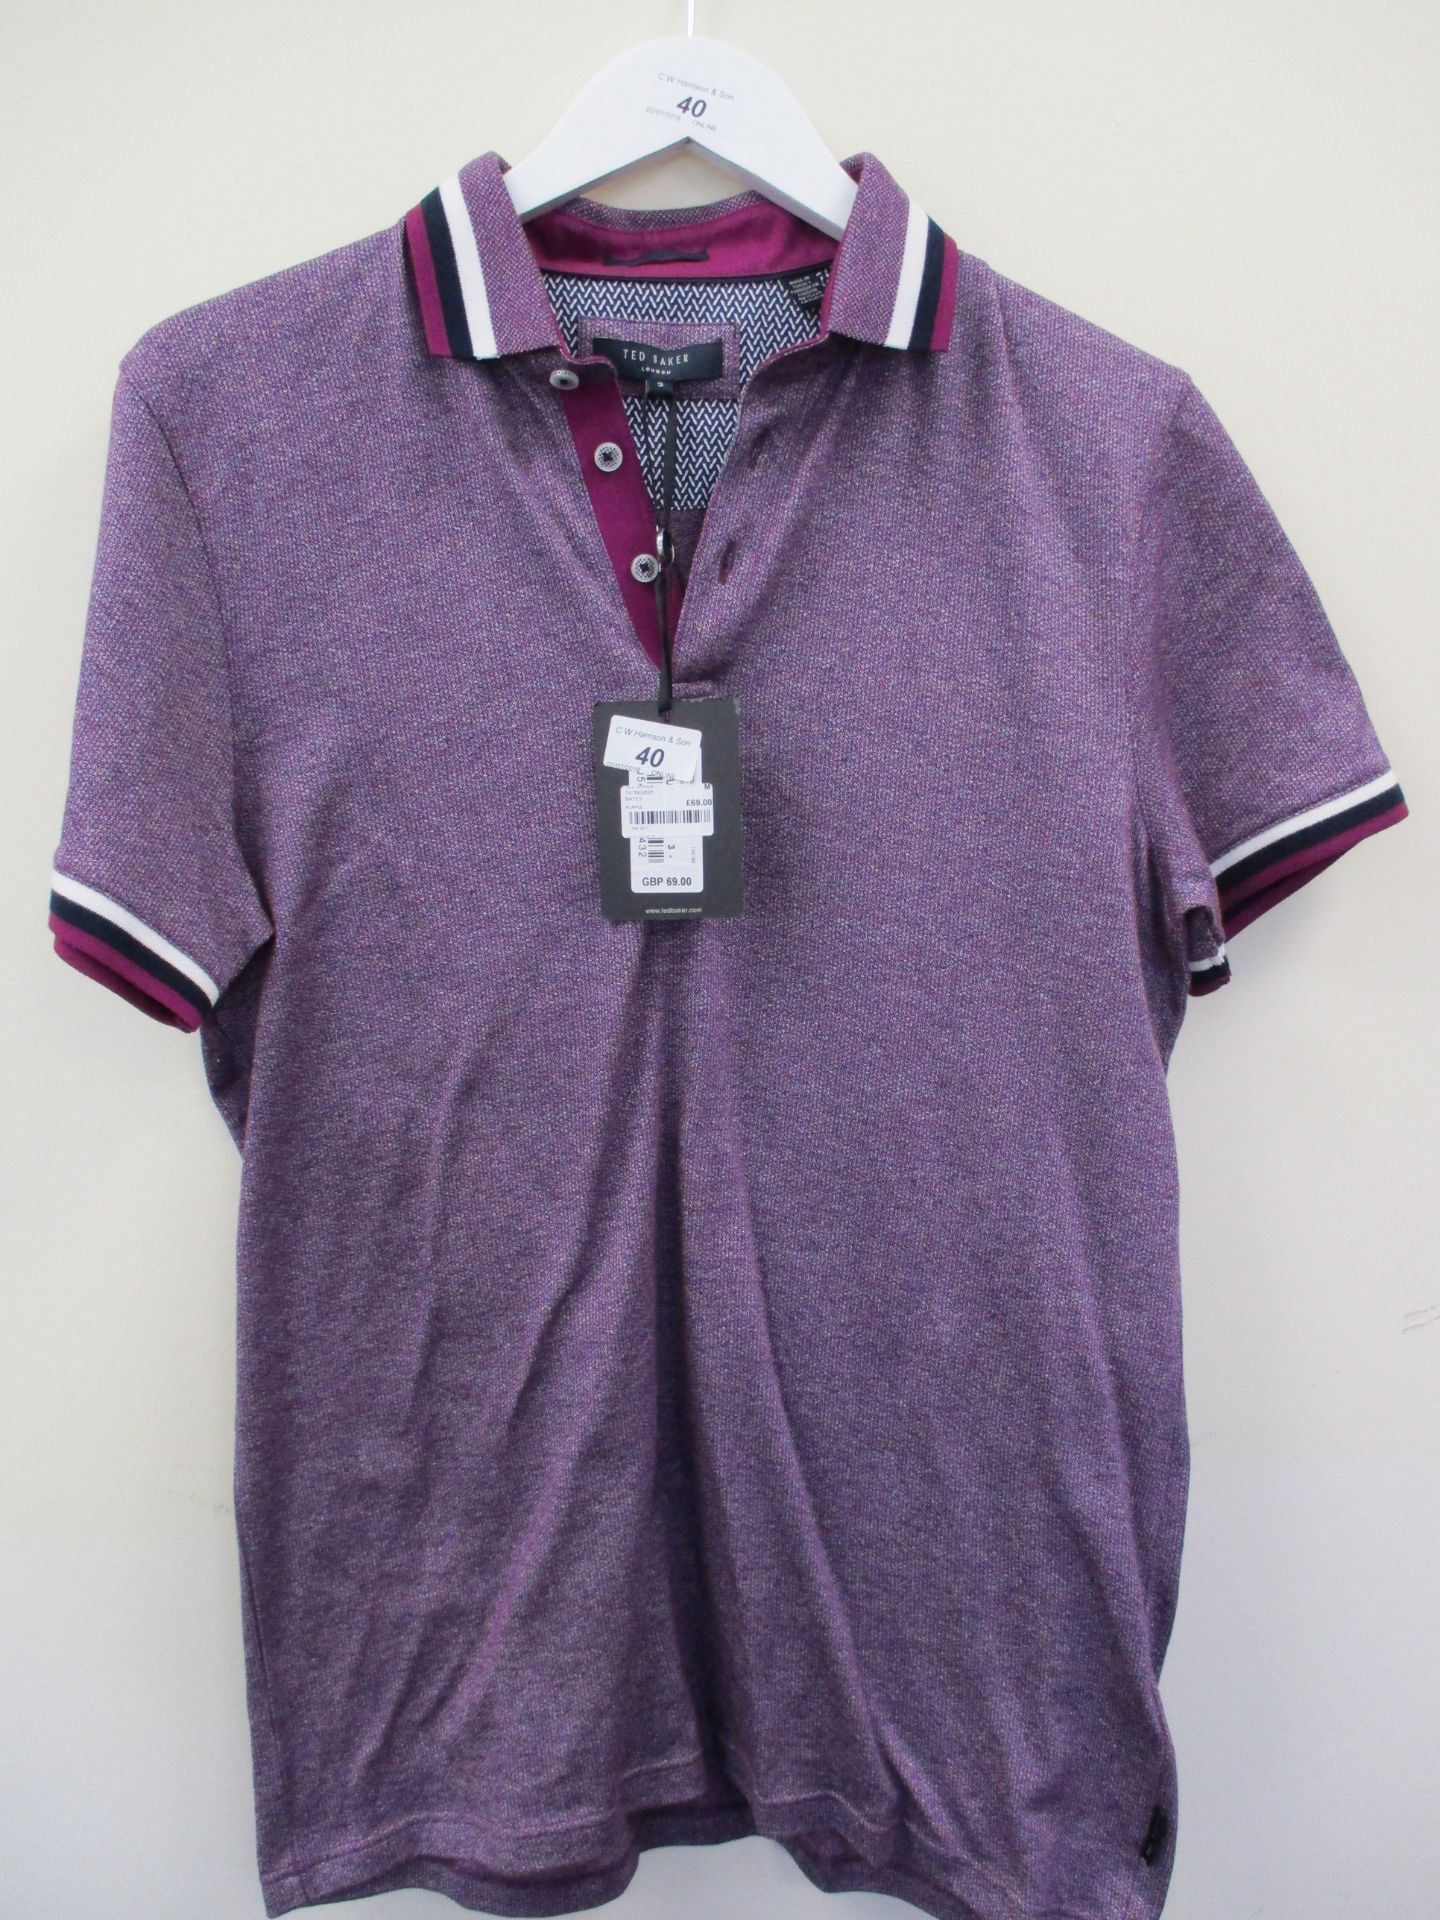 Ted Baker polo shirt - purple - medium RRP £69